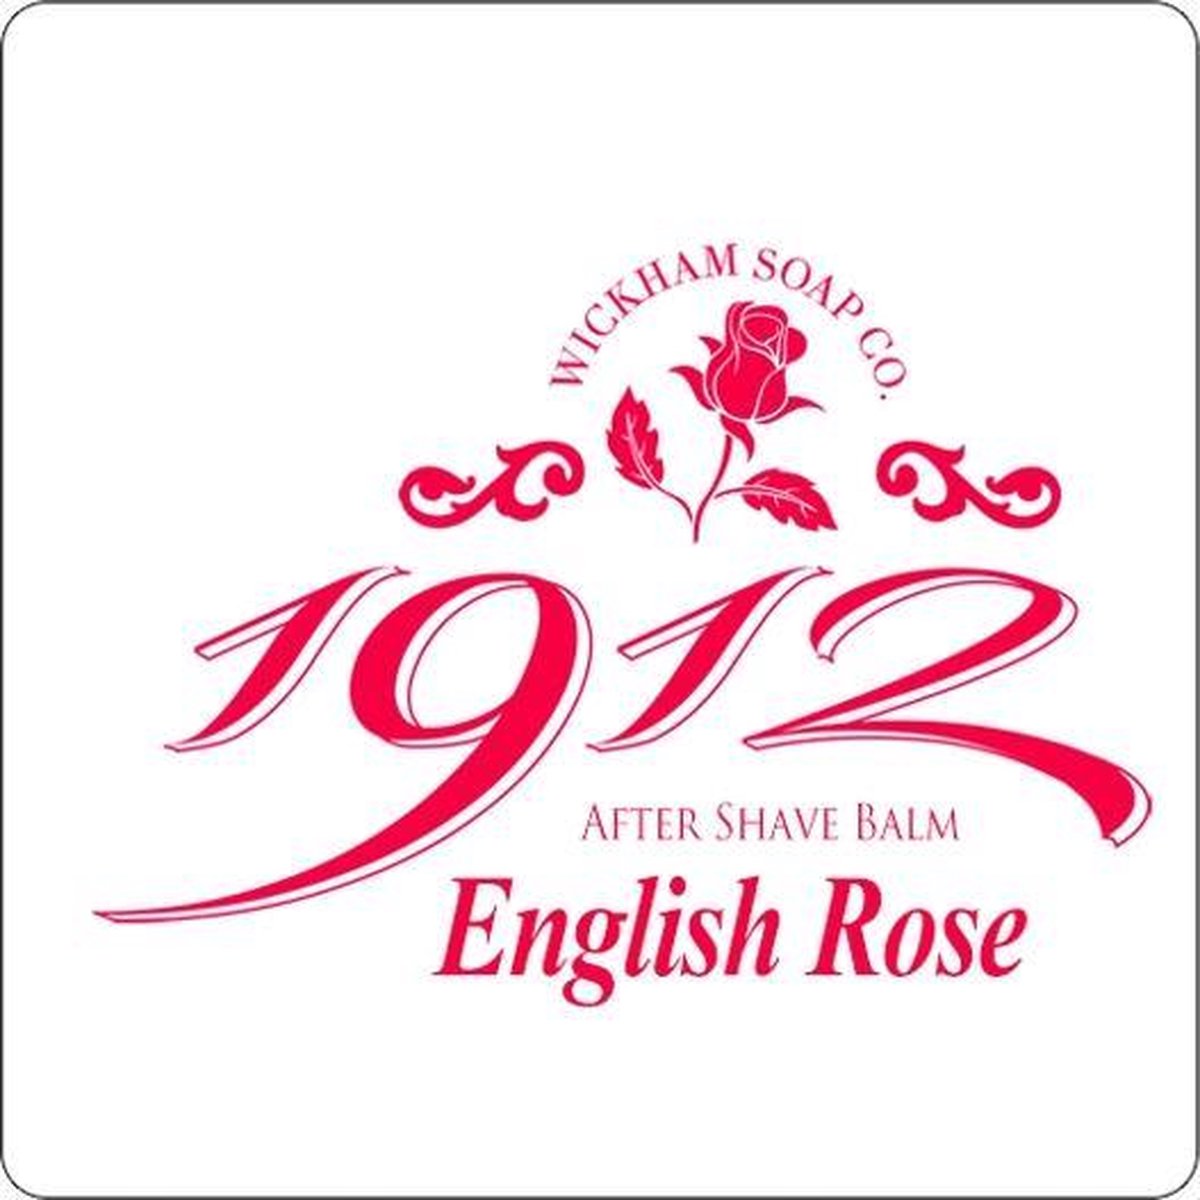 Wickham Soap Co. 1912 after shave balm English Rose 50gr